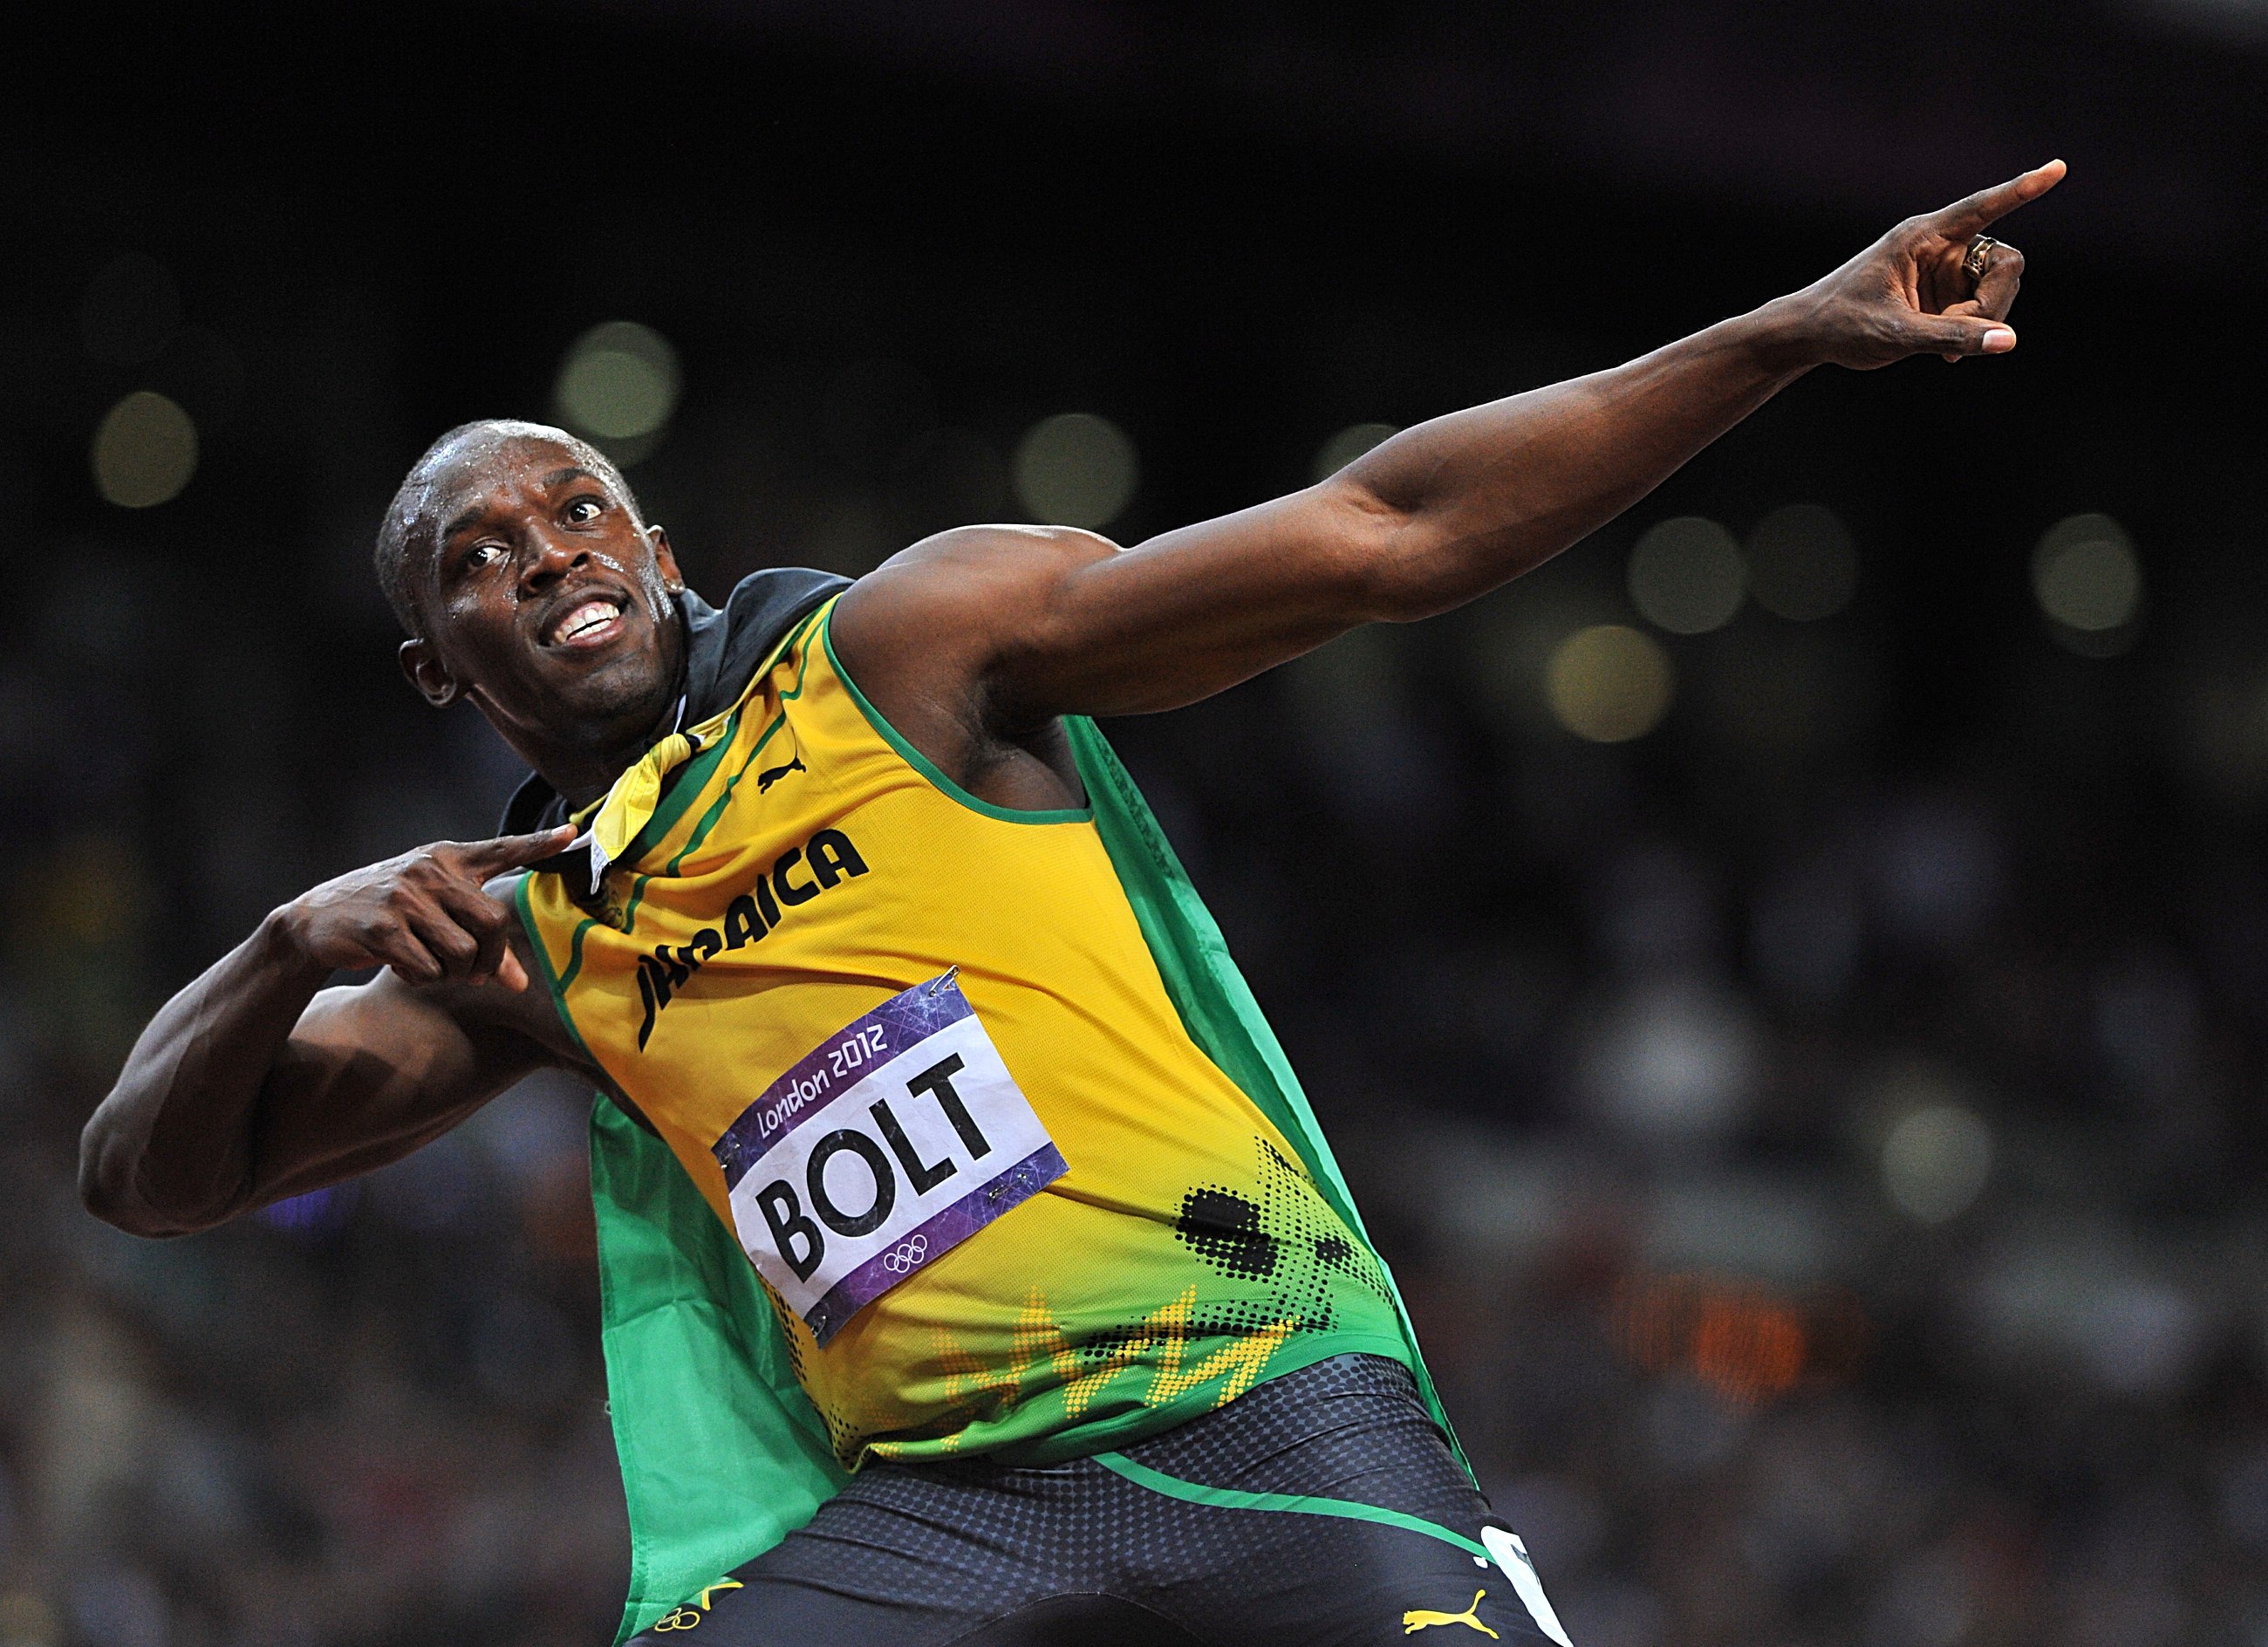 Usain Bolt 100m Record - Steroids Live